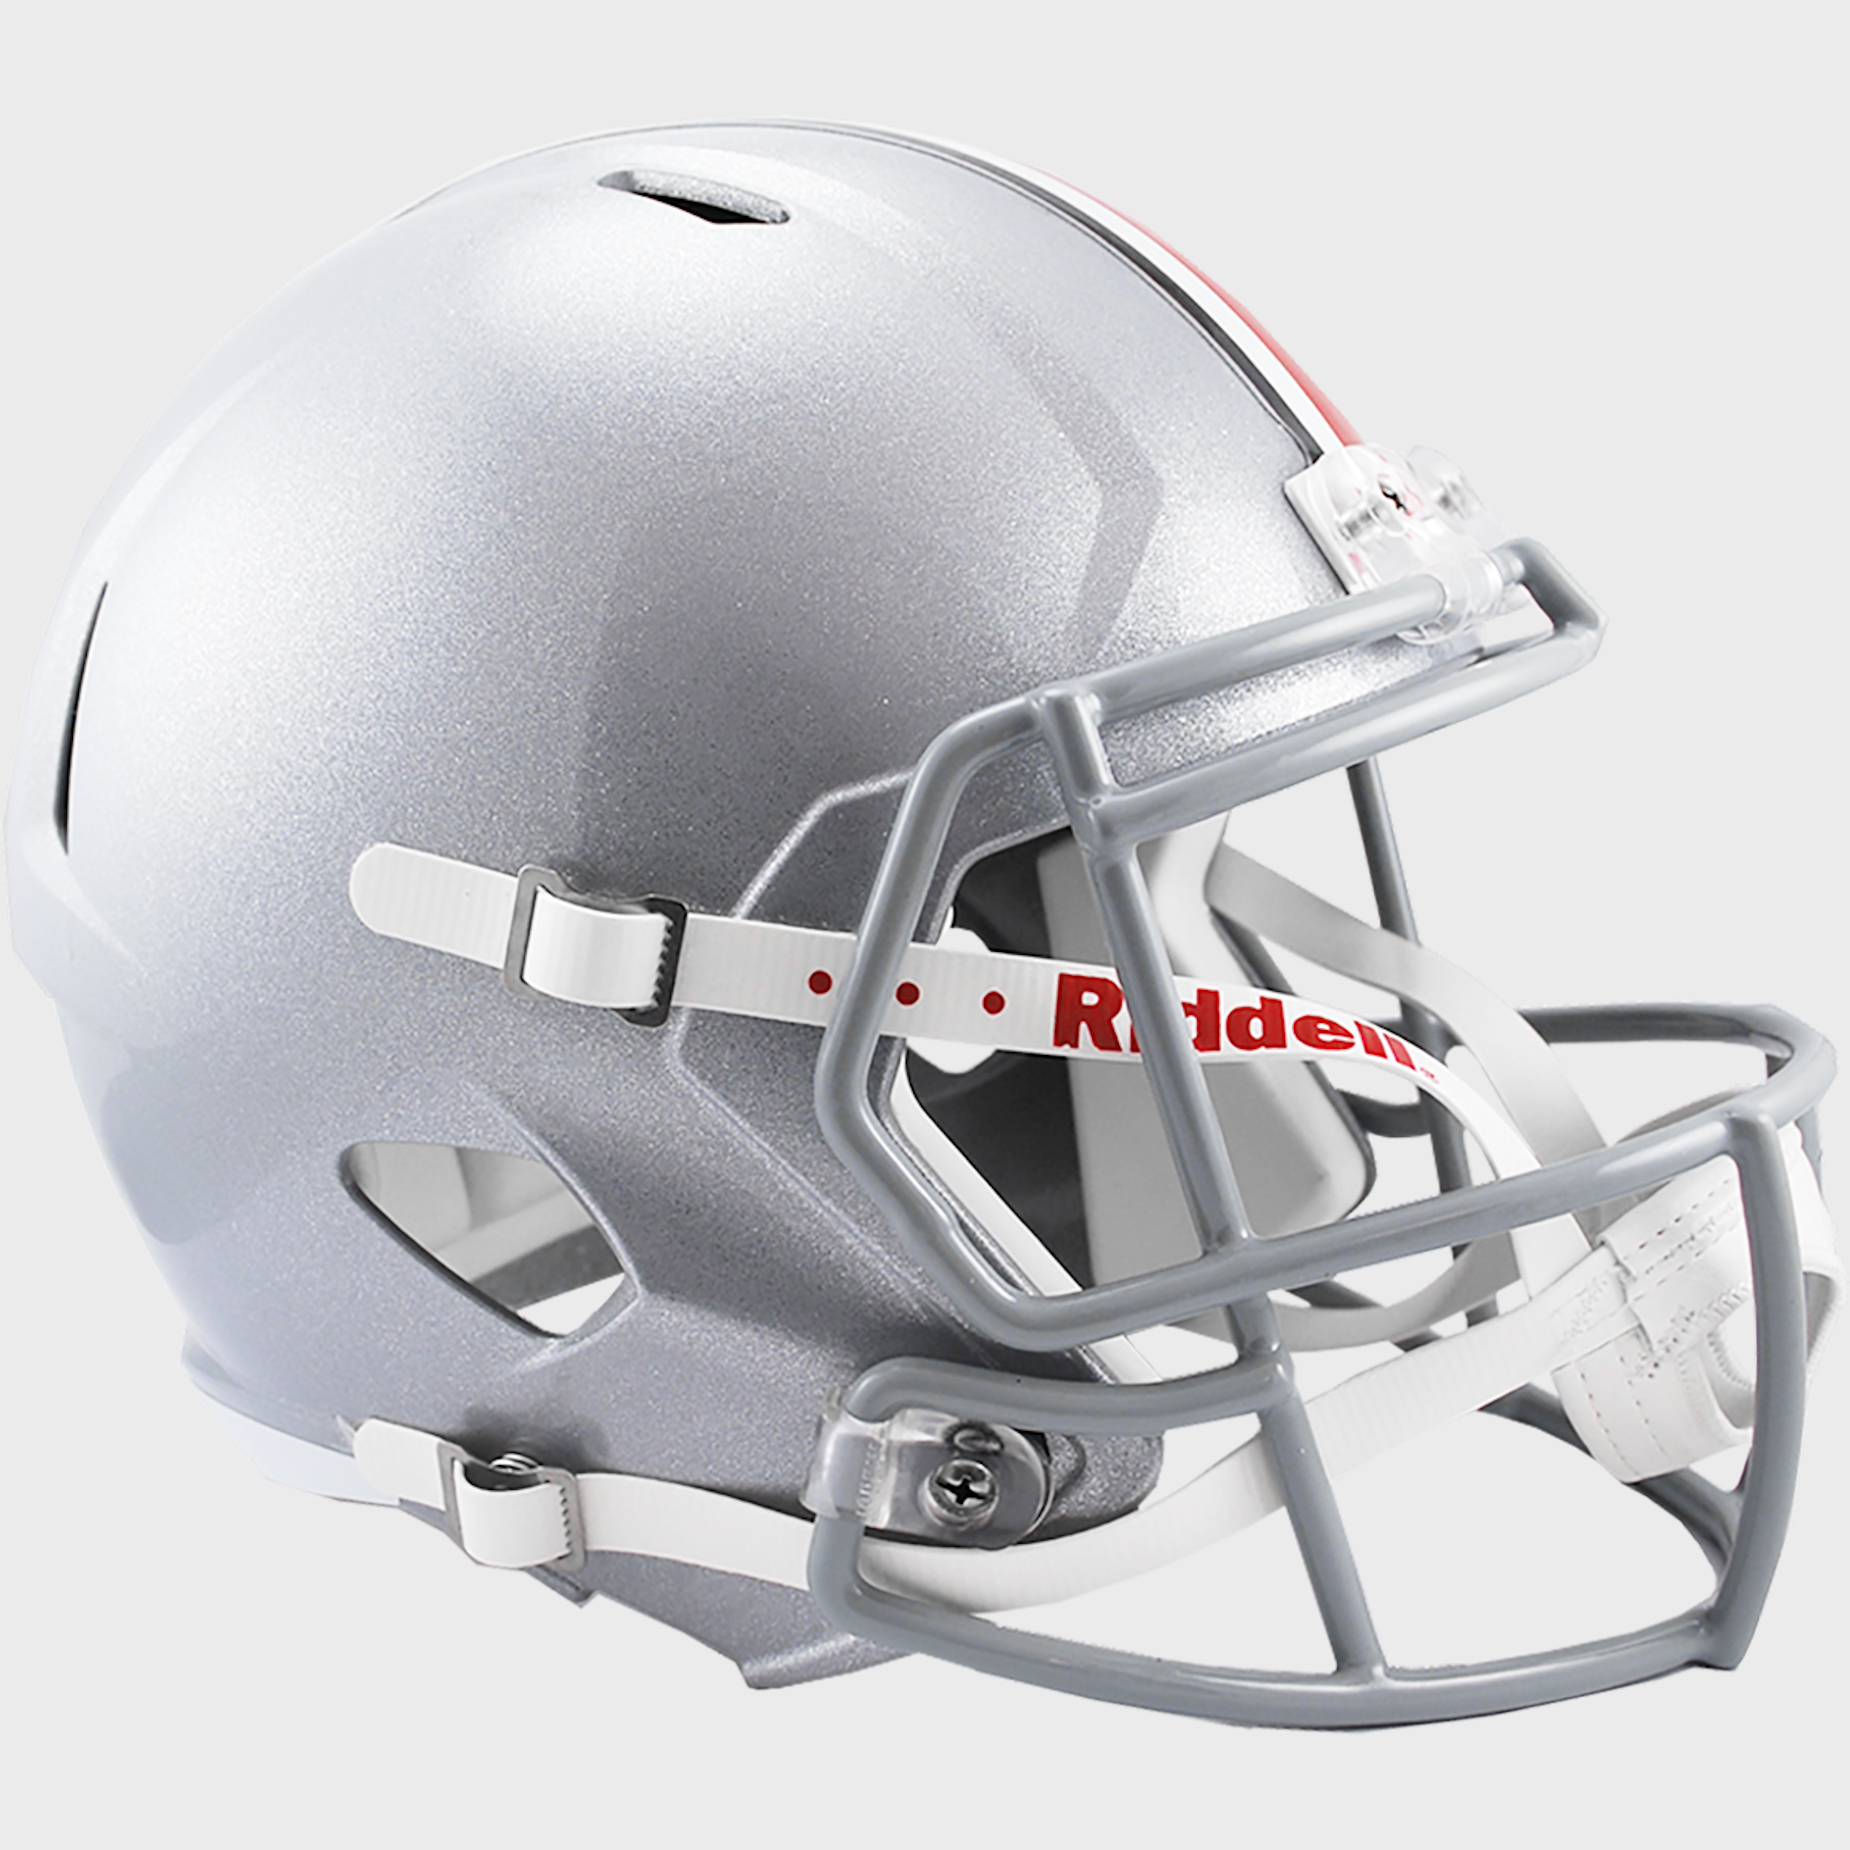 Ohio State Buckeyes Speed Replica Football Helmet